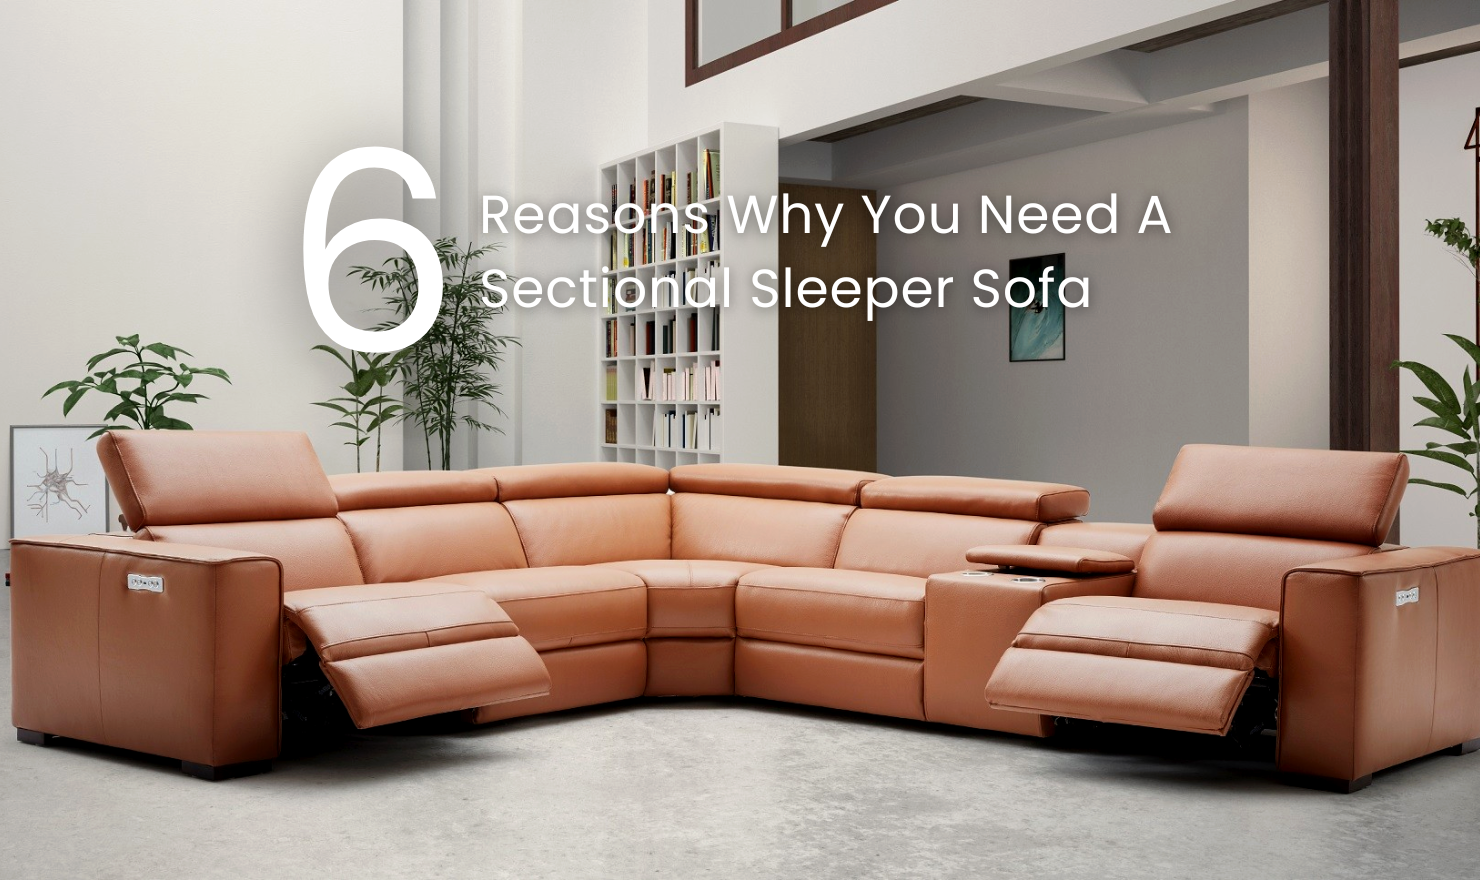 6 Reasons Why You Need A Sectional Sleeper Sofa